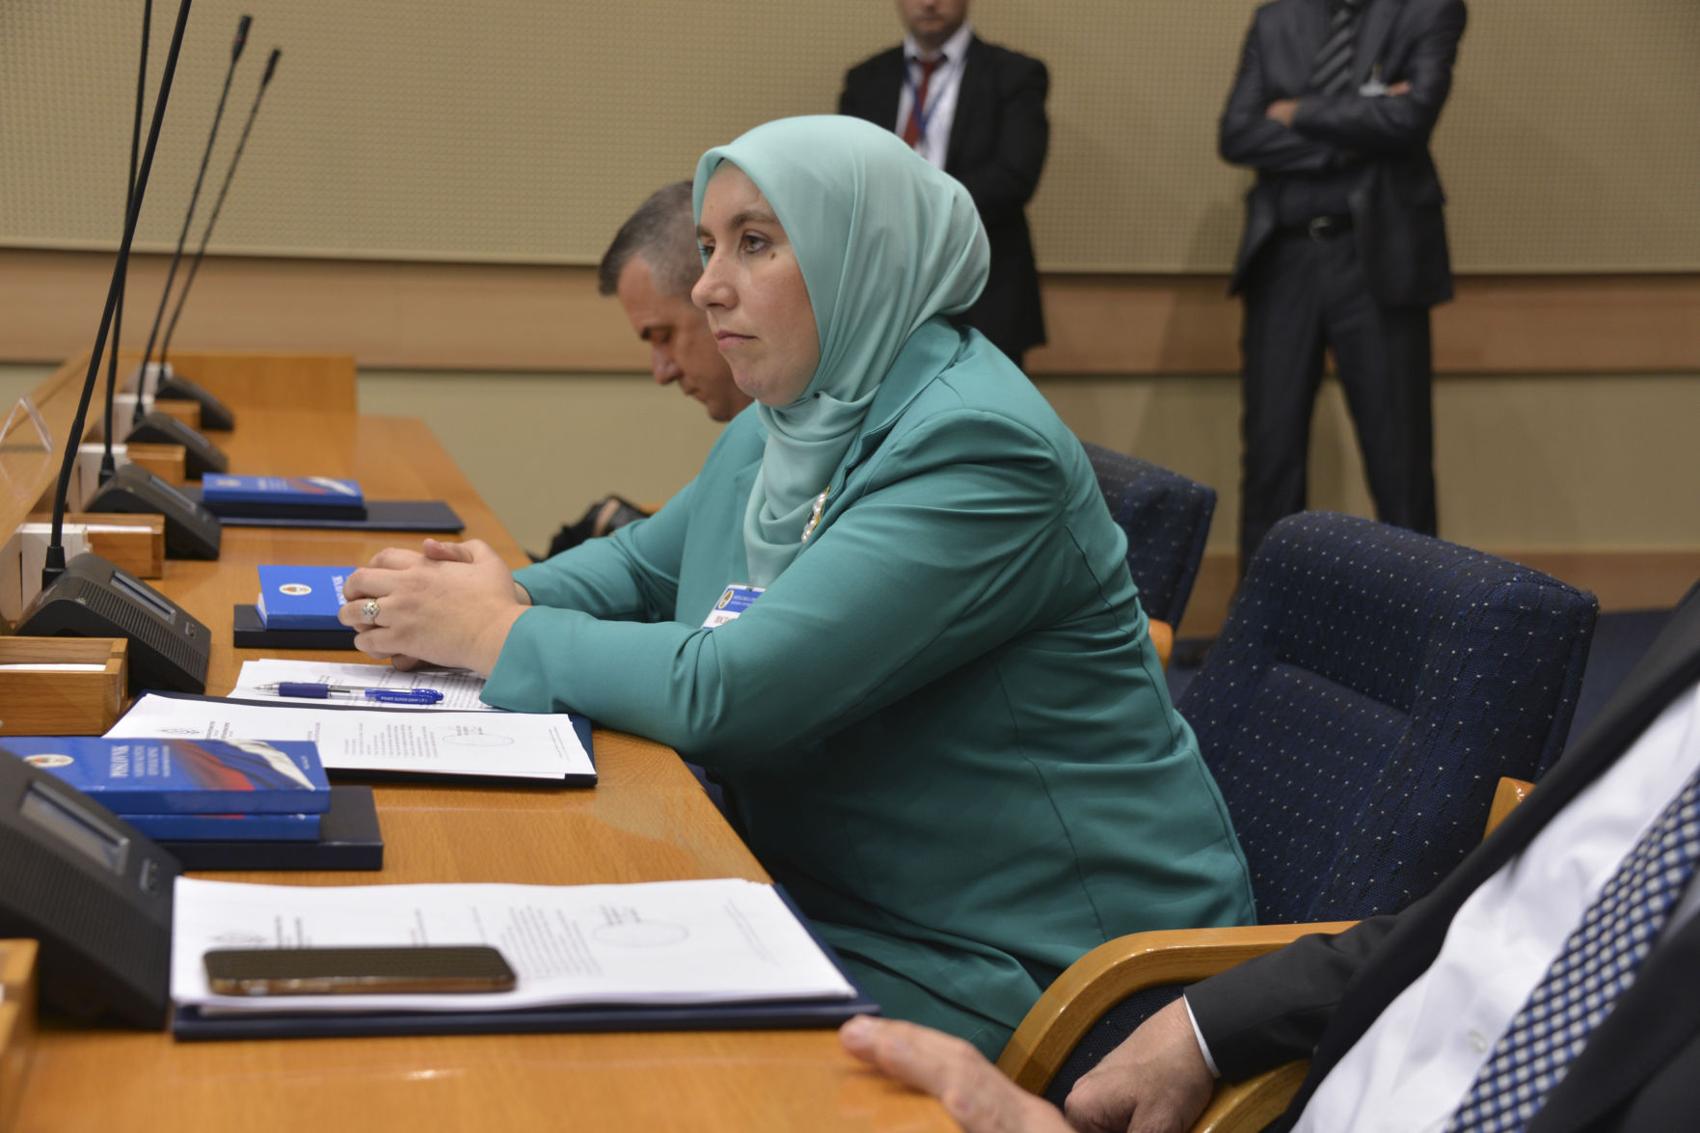 Hijab-wearing lawmaker takes seat in Bosnian Serb parliament